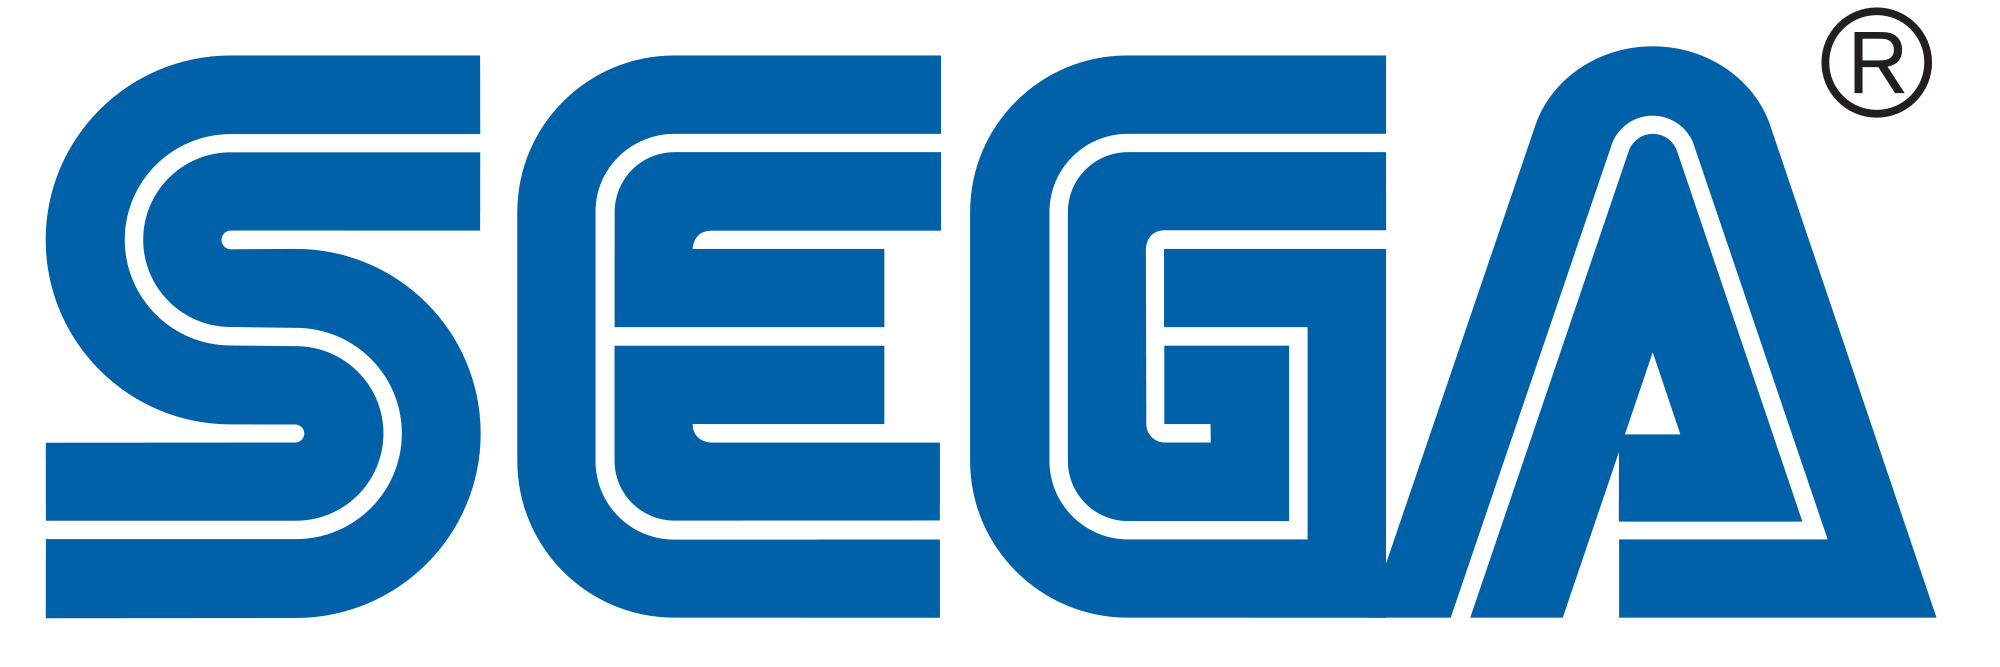 Sega registra i marchi Virtua Fighter e Battle  Genesis